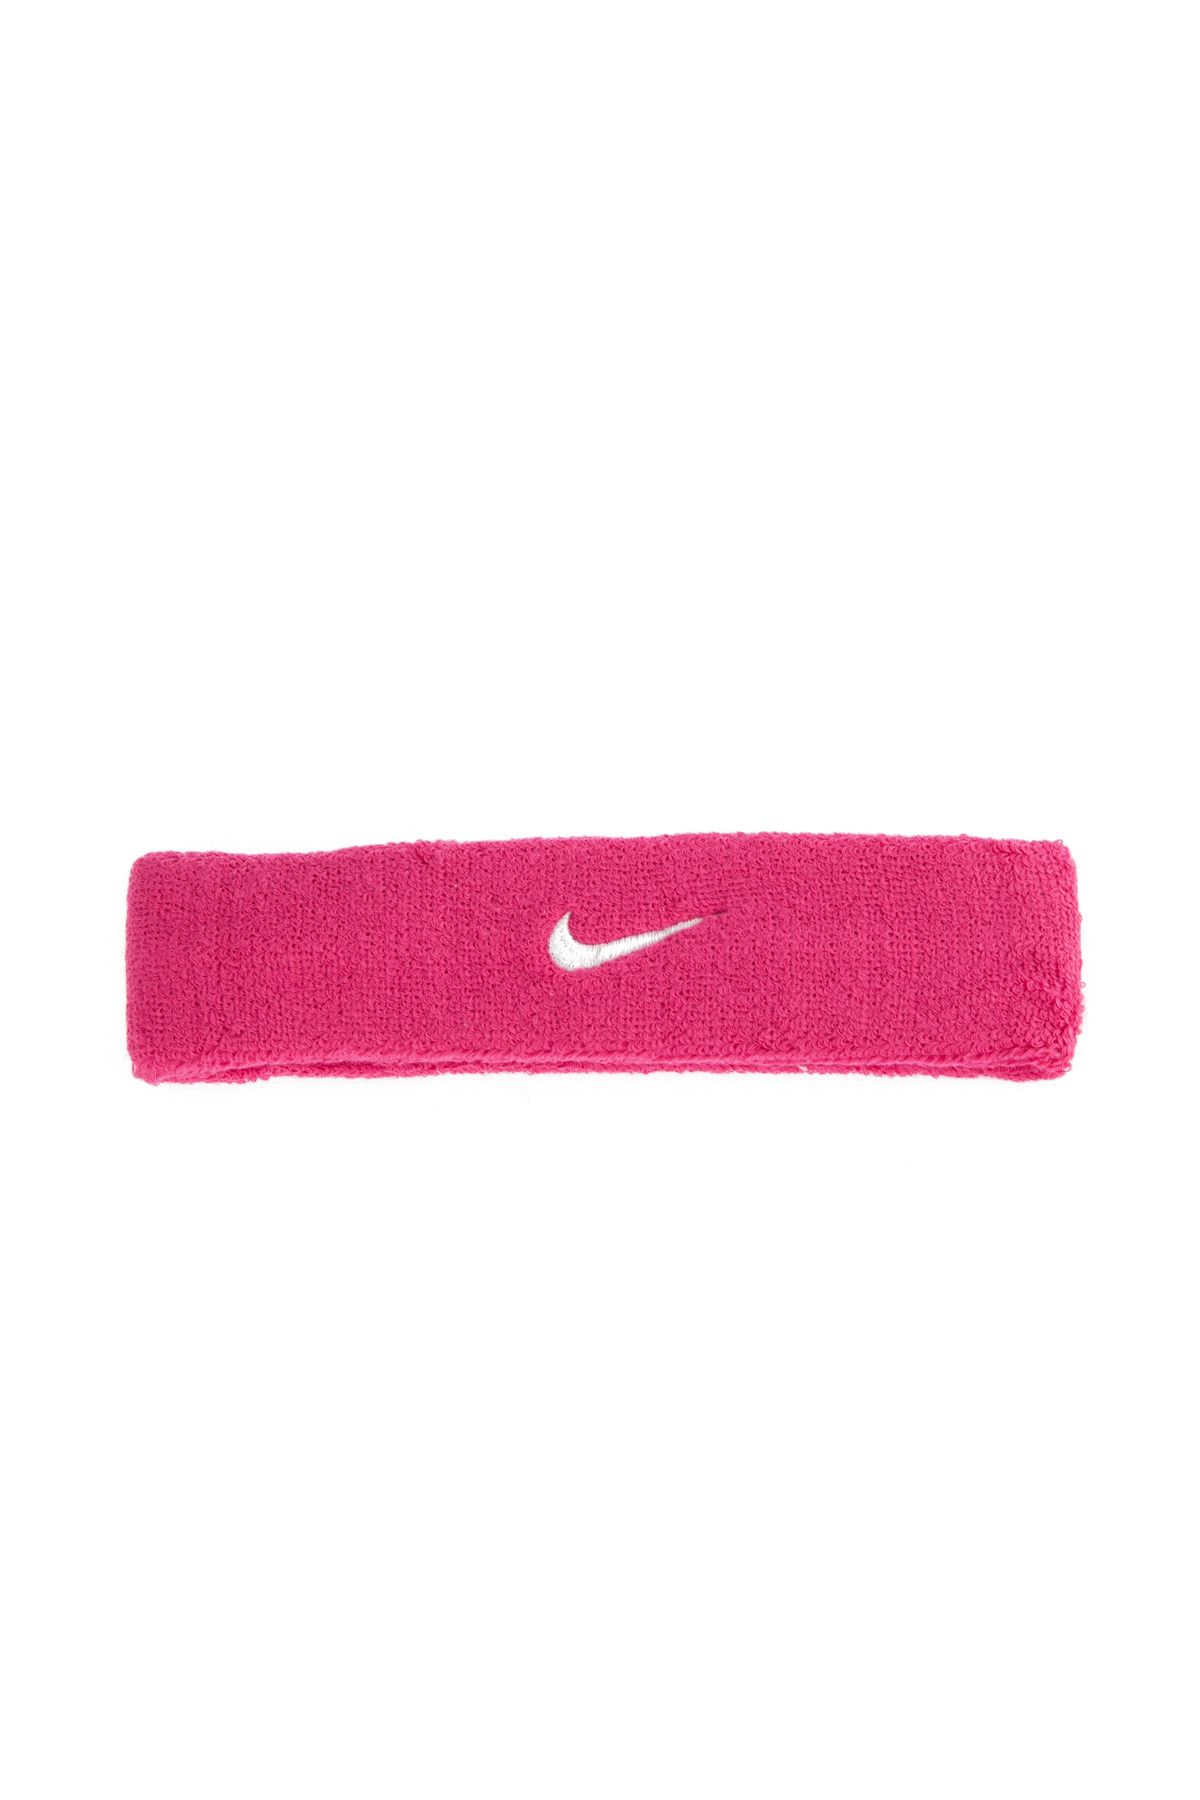 Nike Unisex Pembe Swoosh Headband Havlu Saç Kafa Bandı Nnn07639os